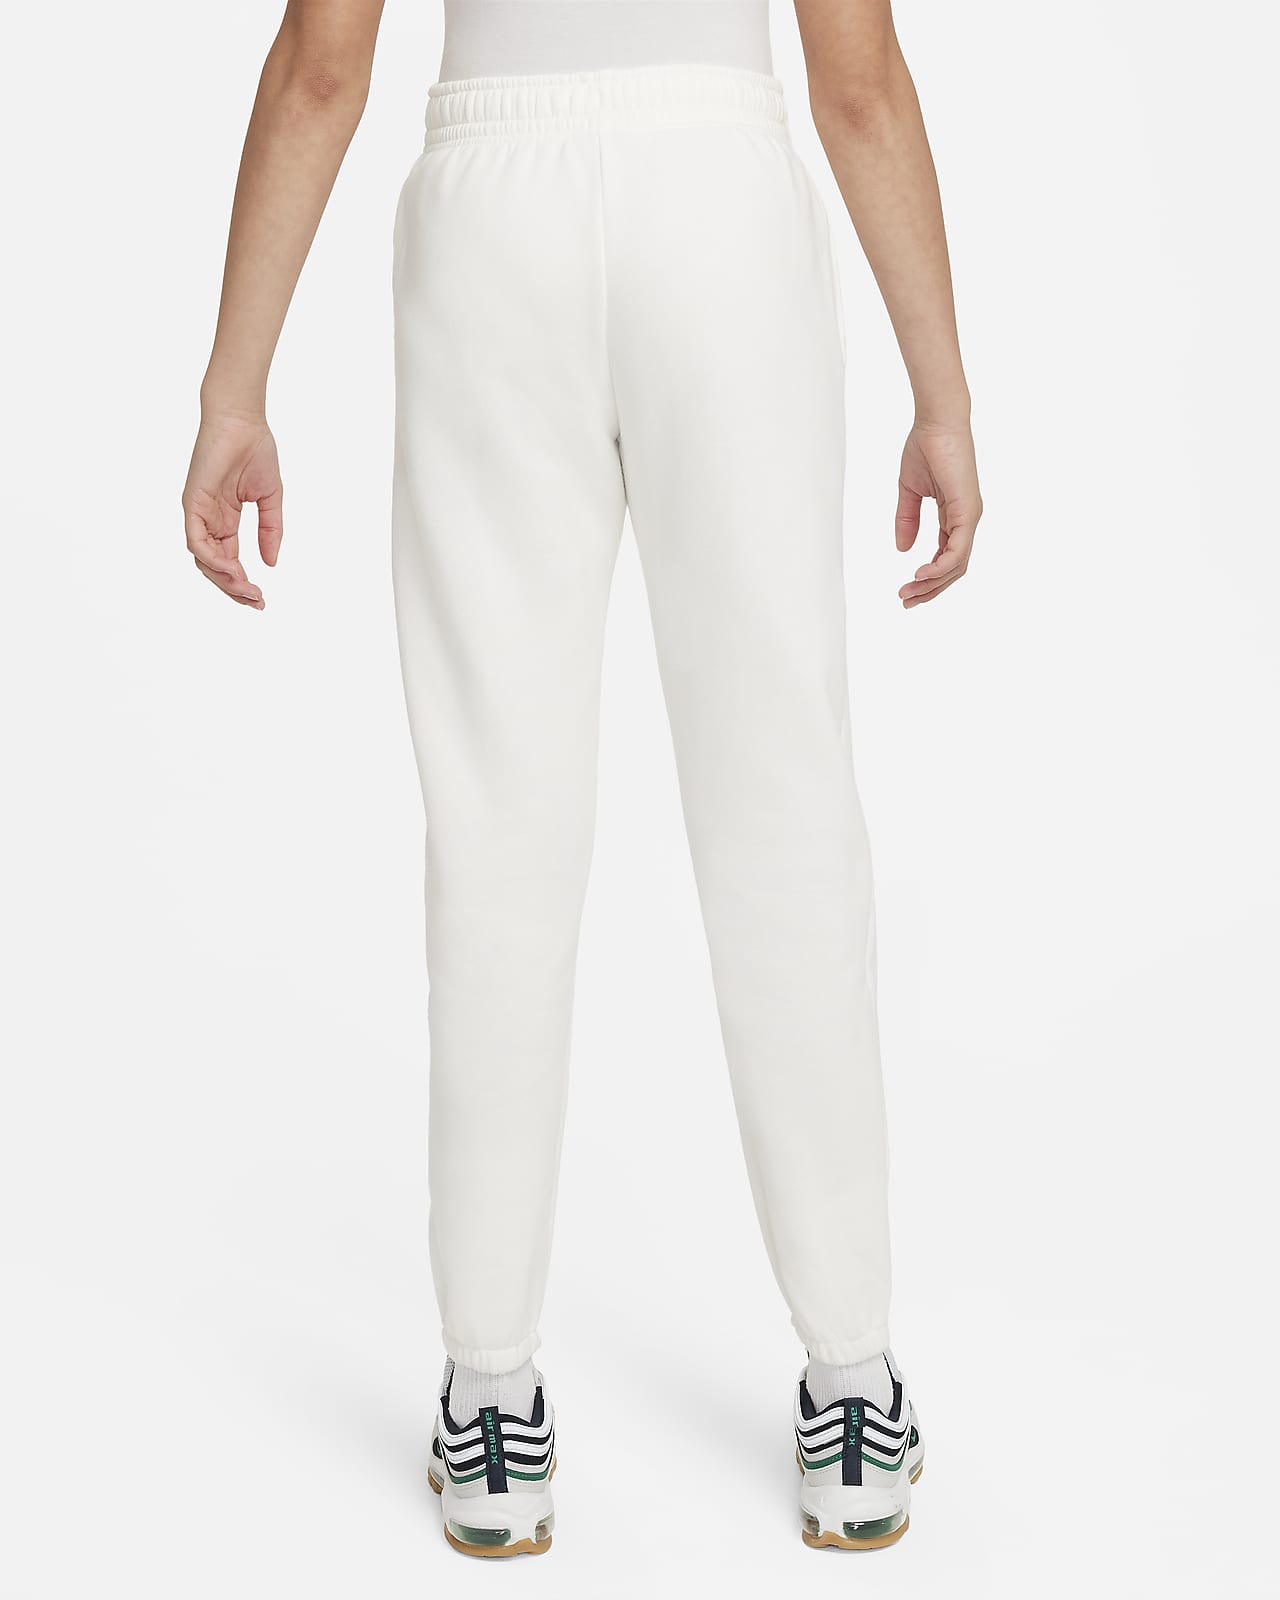 White Basketball Trousers & Tights Tights & Leggings. Nike FI